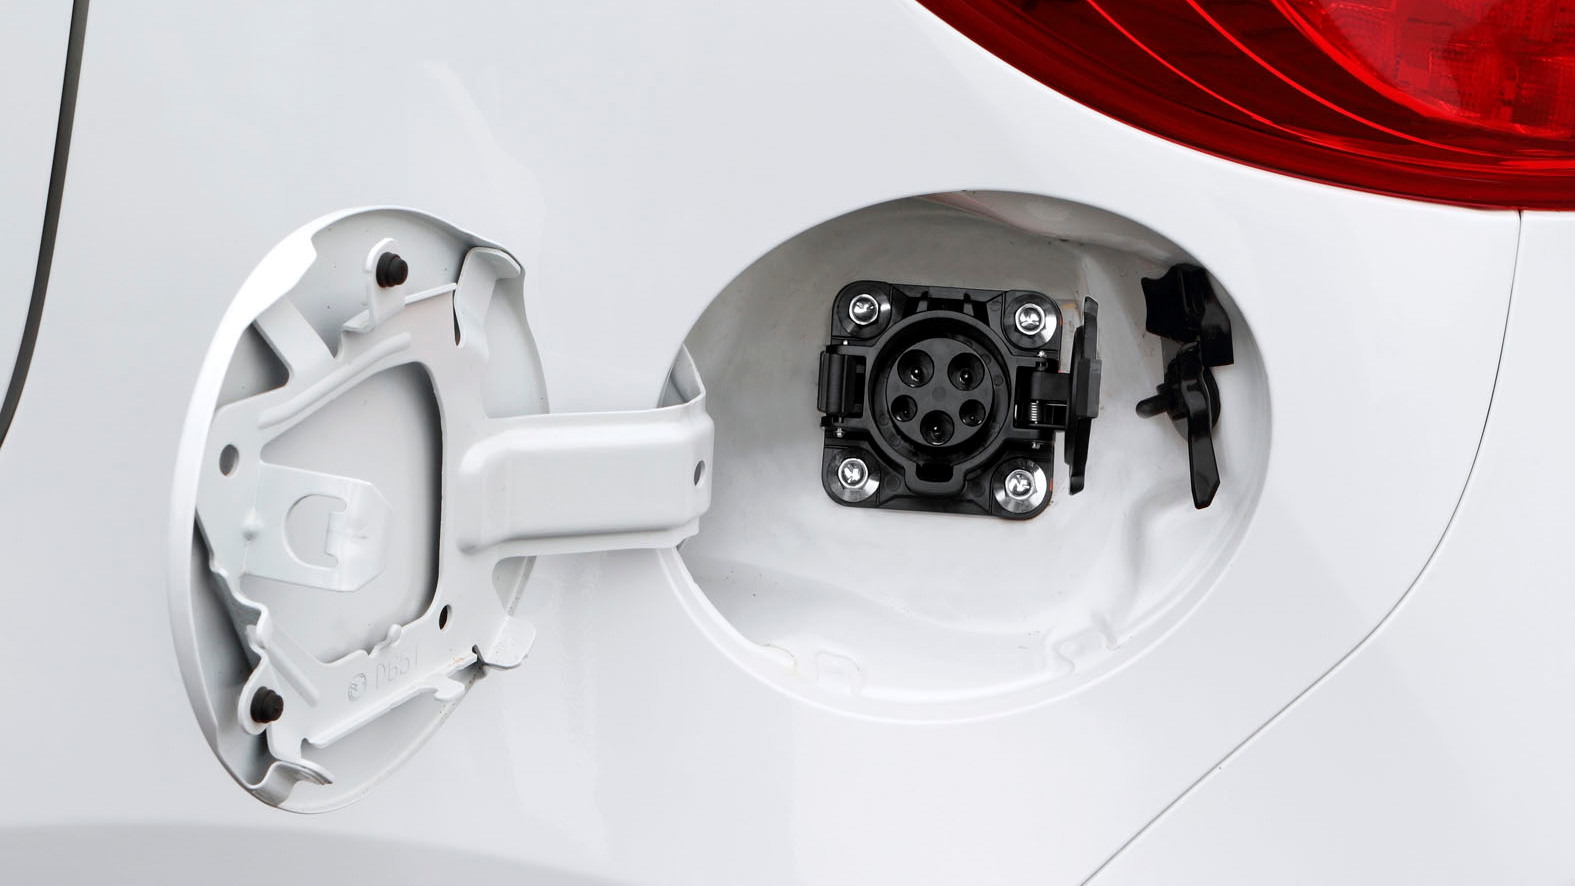 Mazda Demio EV test-fleet electric car in Japan (aka Mazda2) - charging port